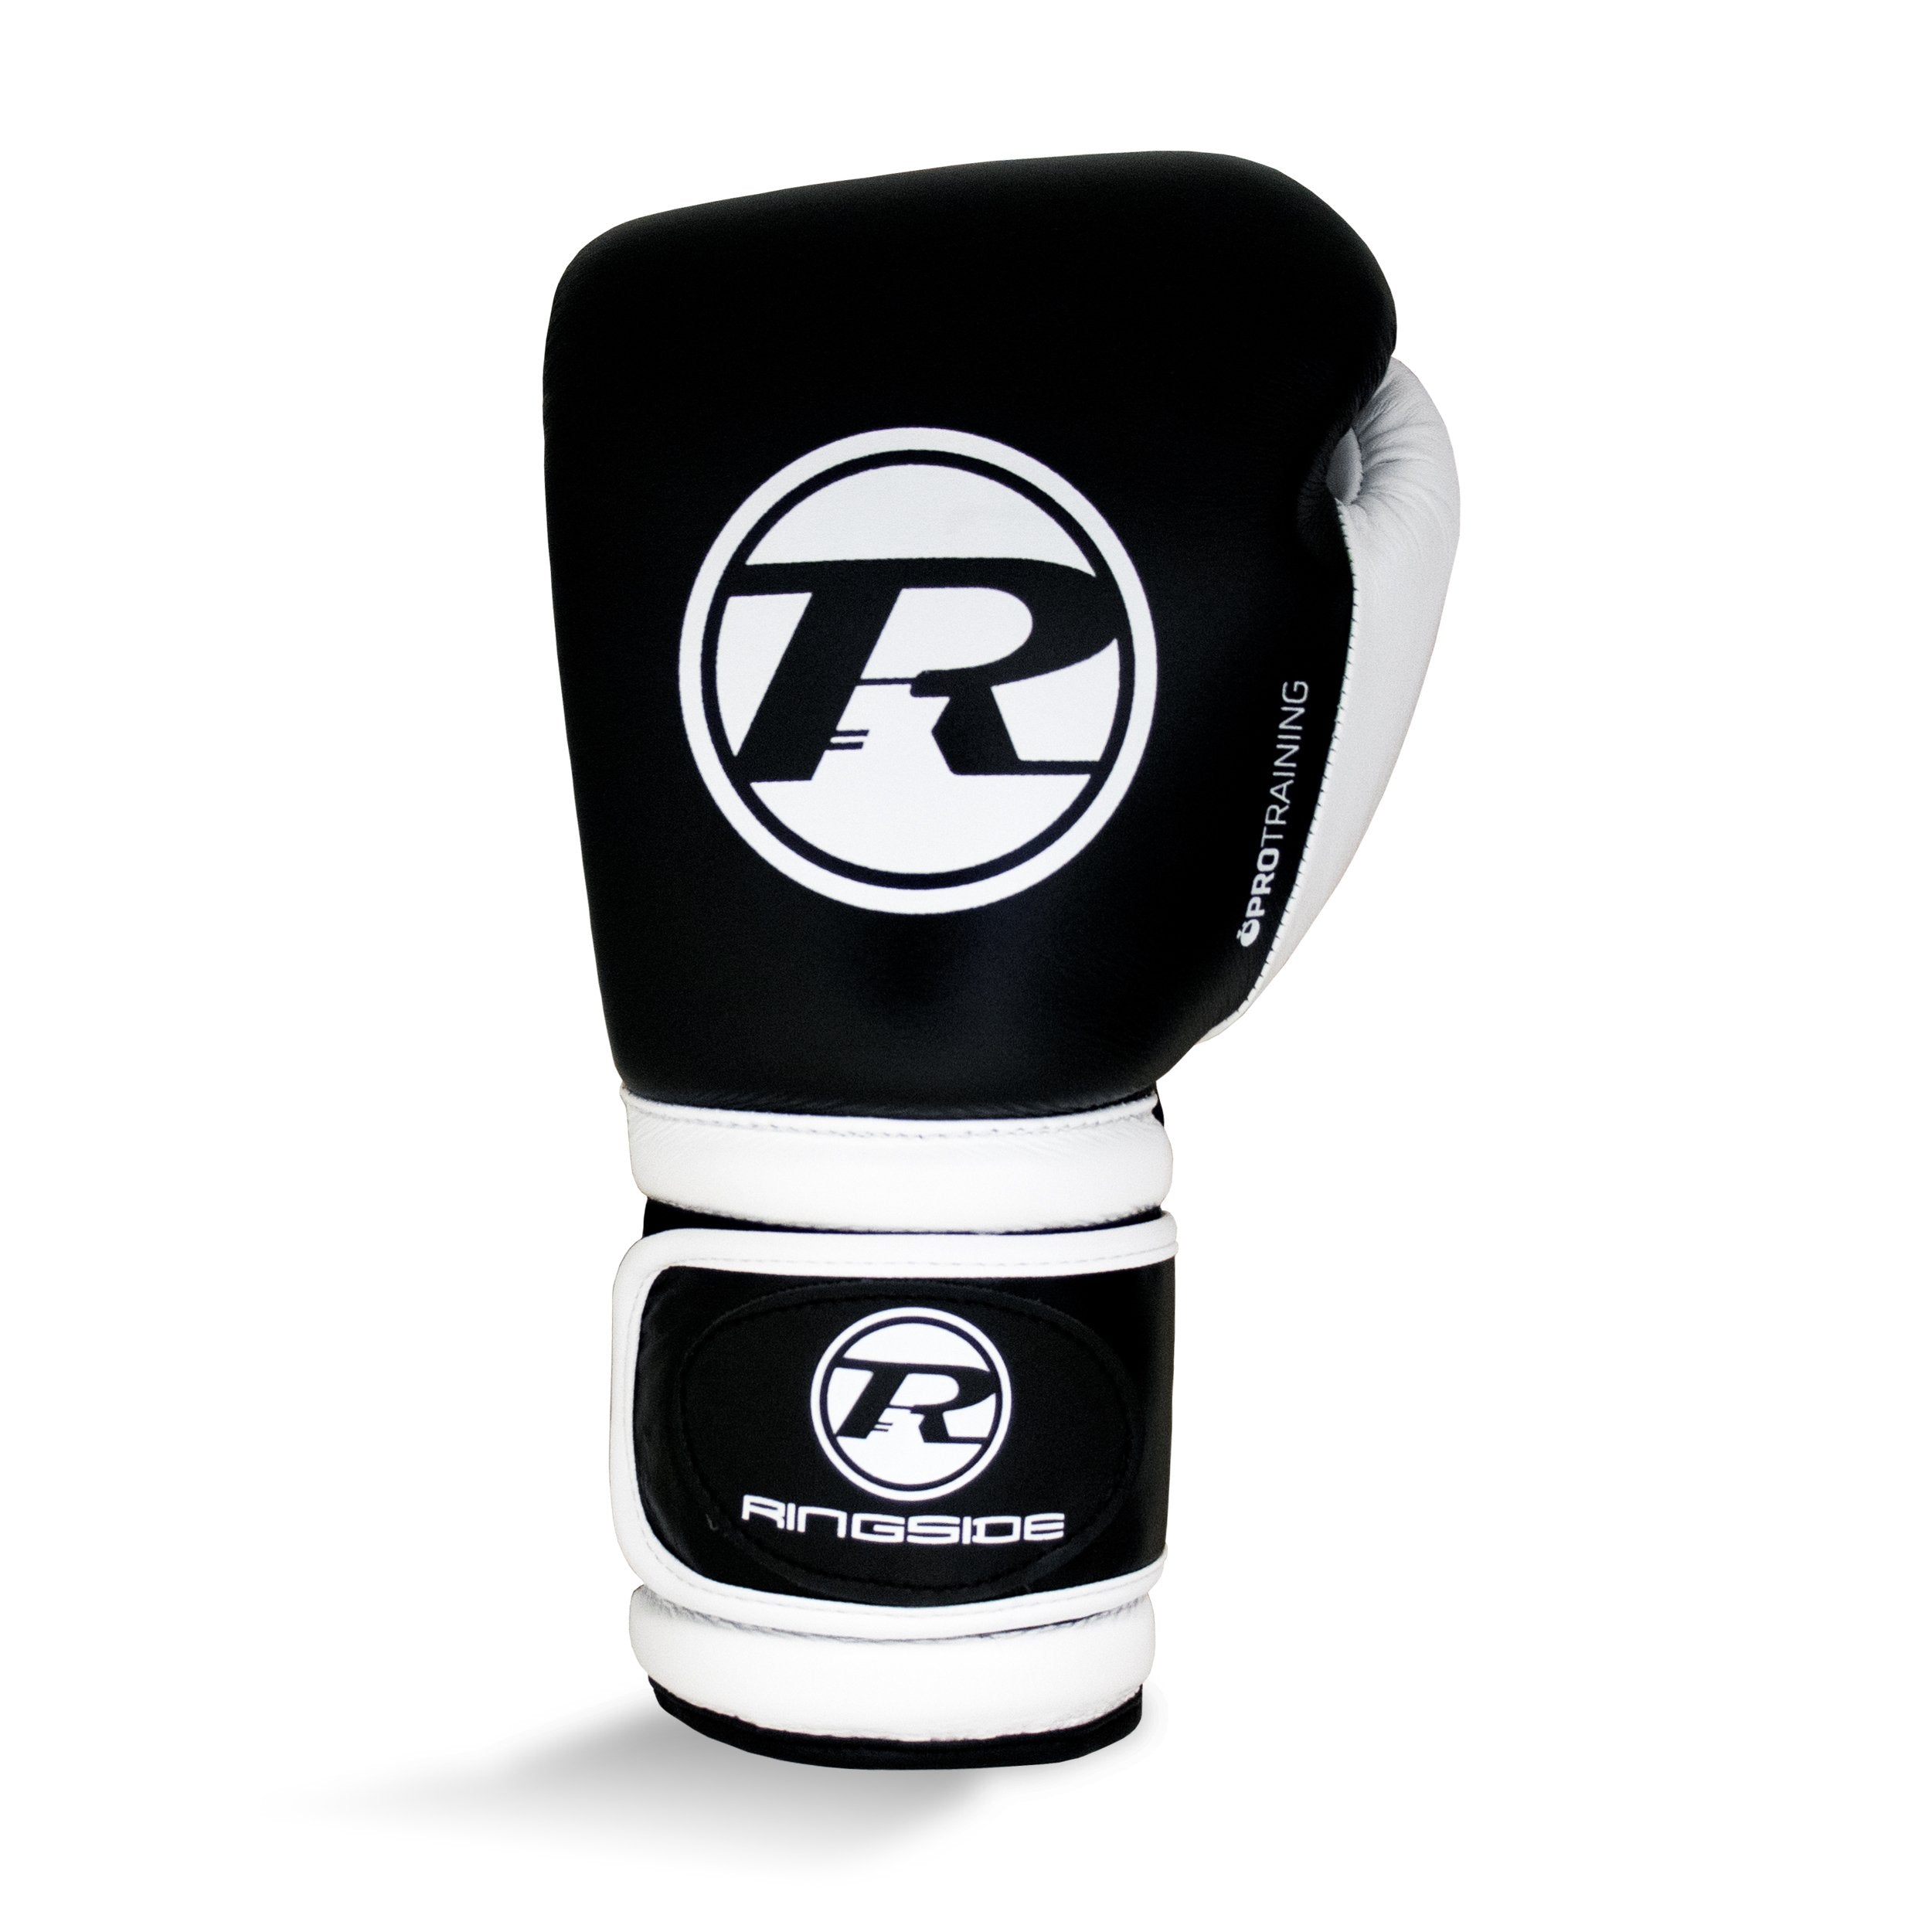 Pro Training G1 Boxing Glove - Black / White